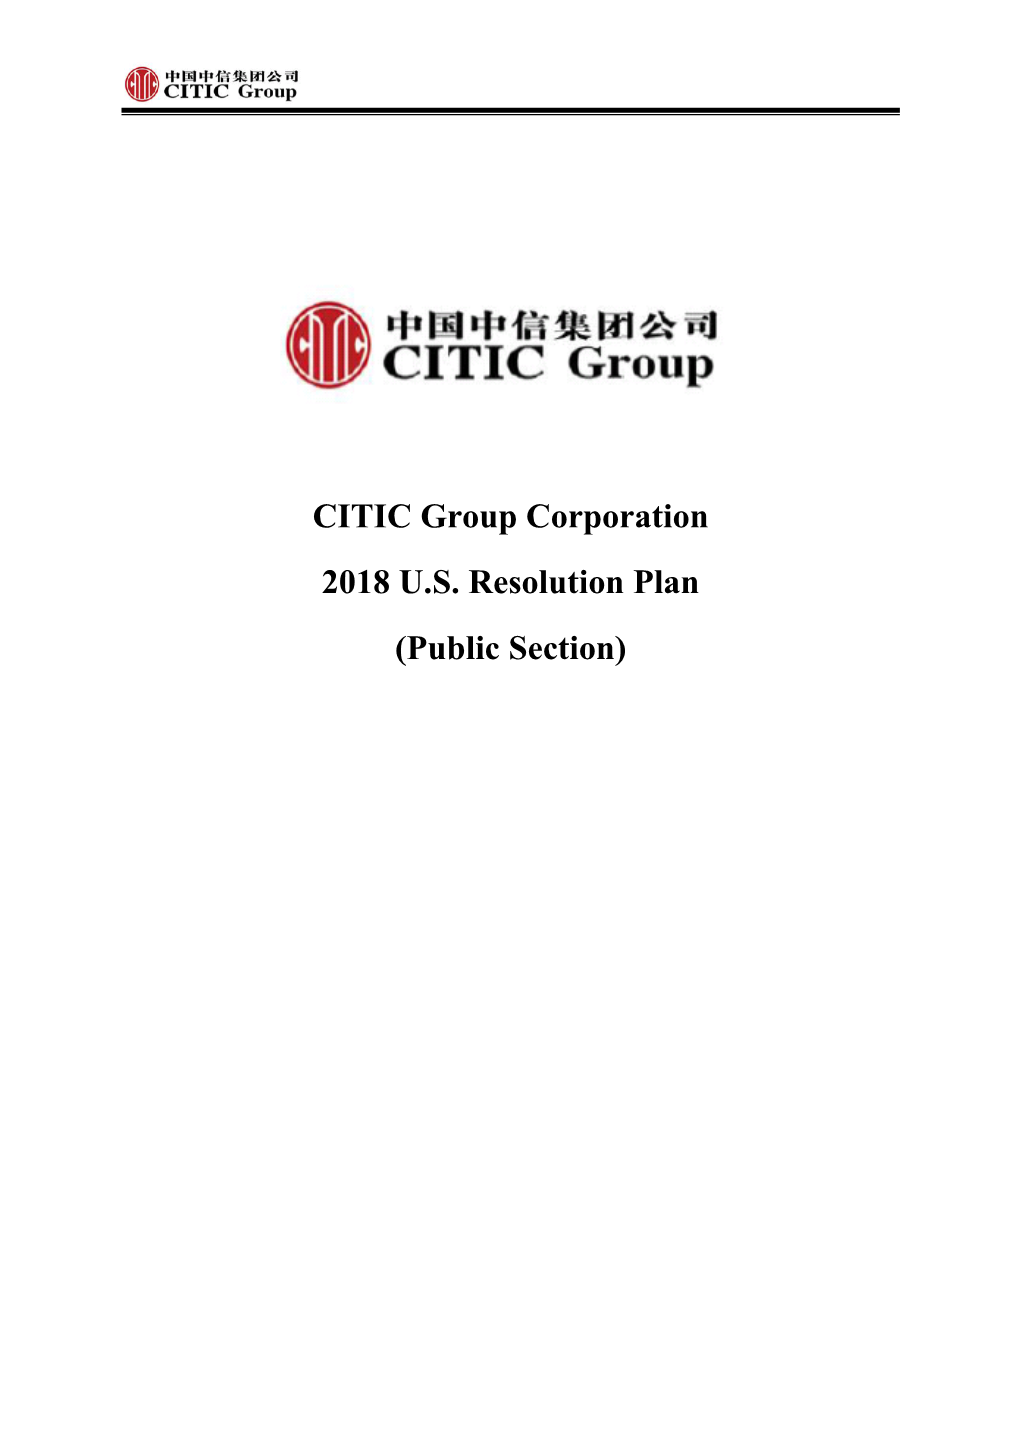 CITIC Group Corporation 2018 U.S. Resolution Plan (Public Section)